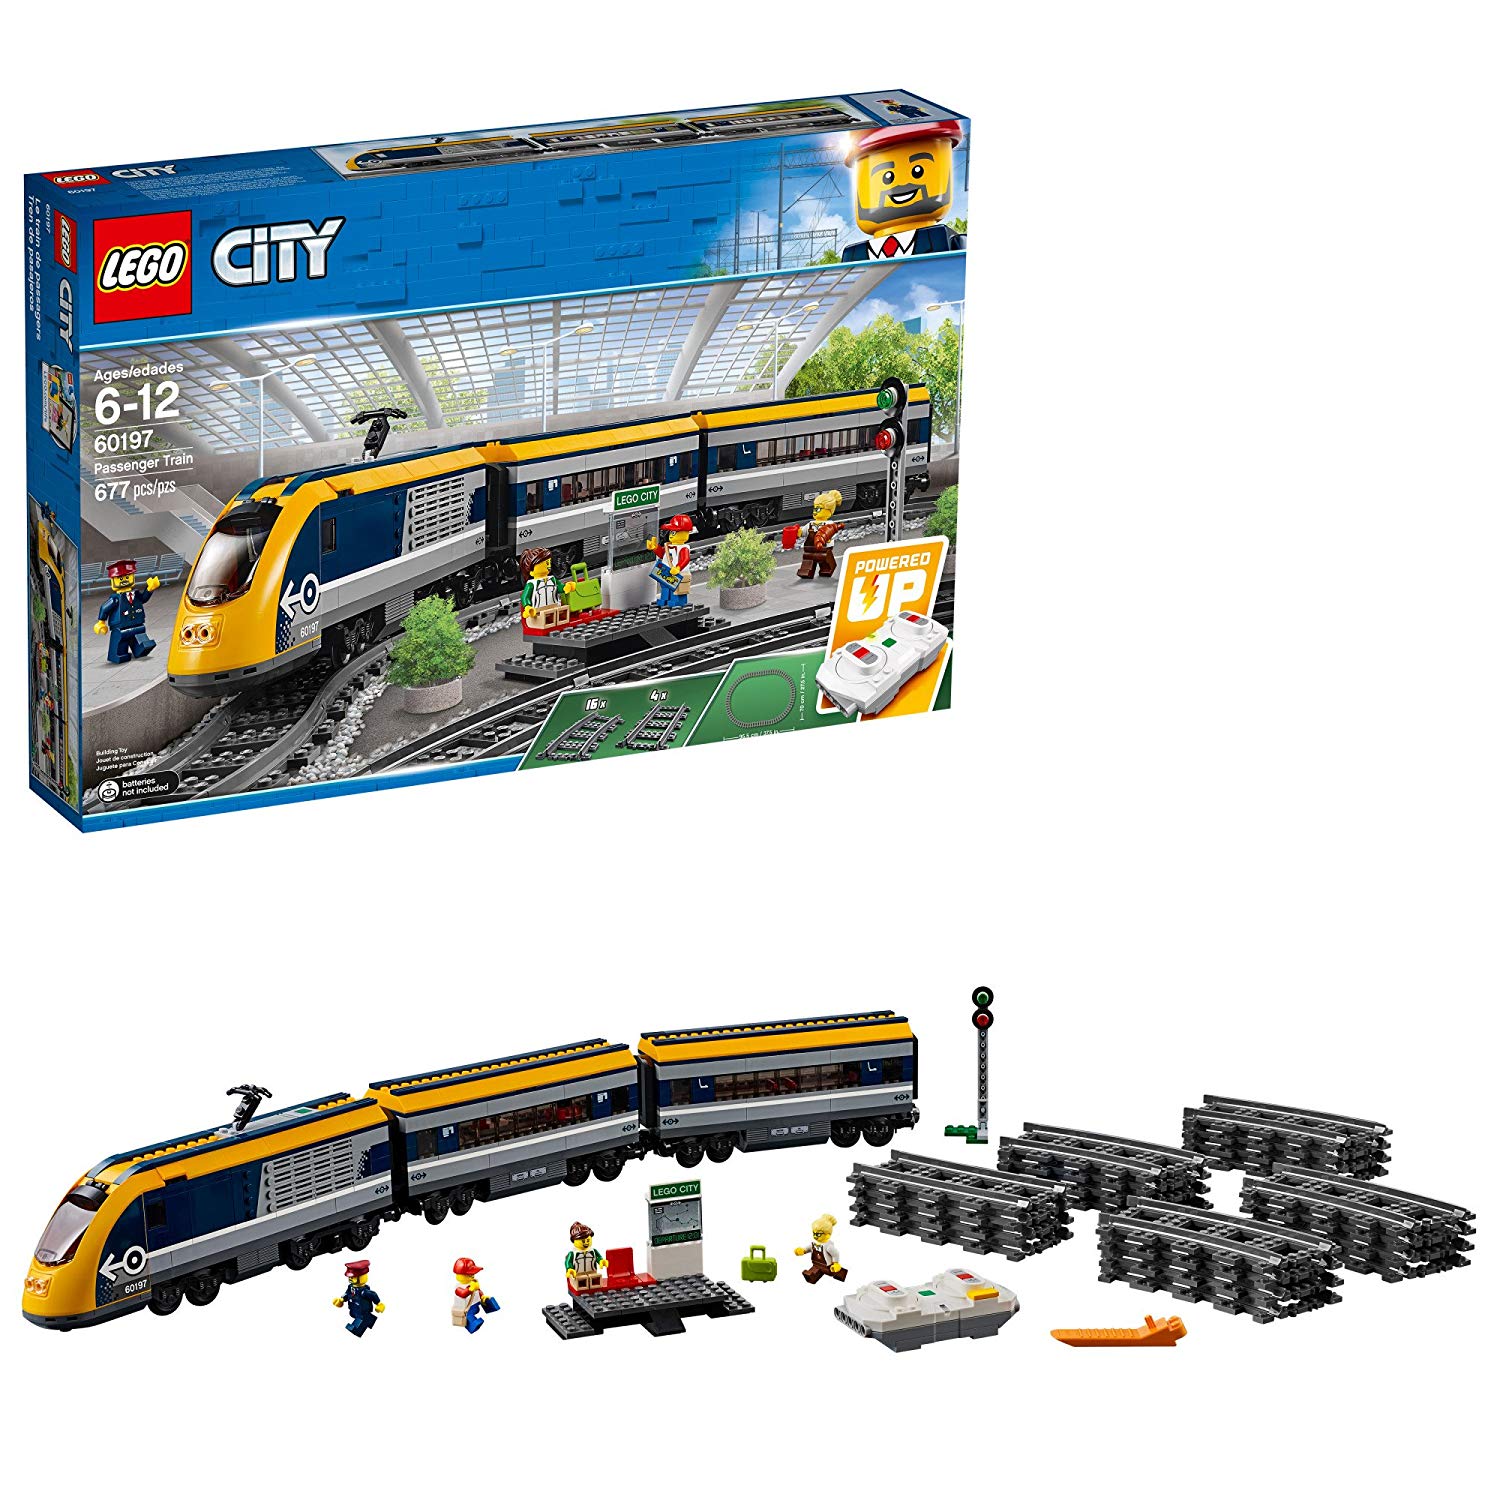 Lego City 60197 – People Pull (677) – 2018